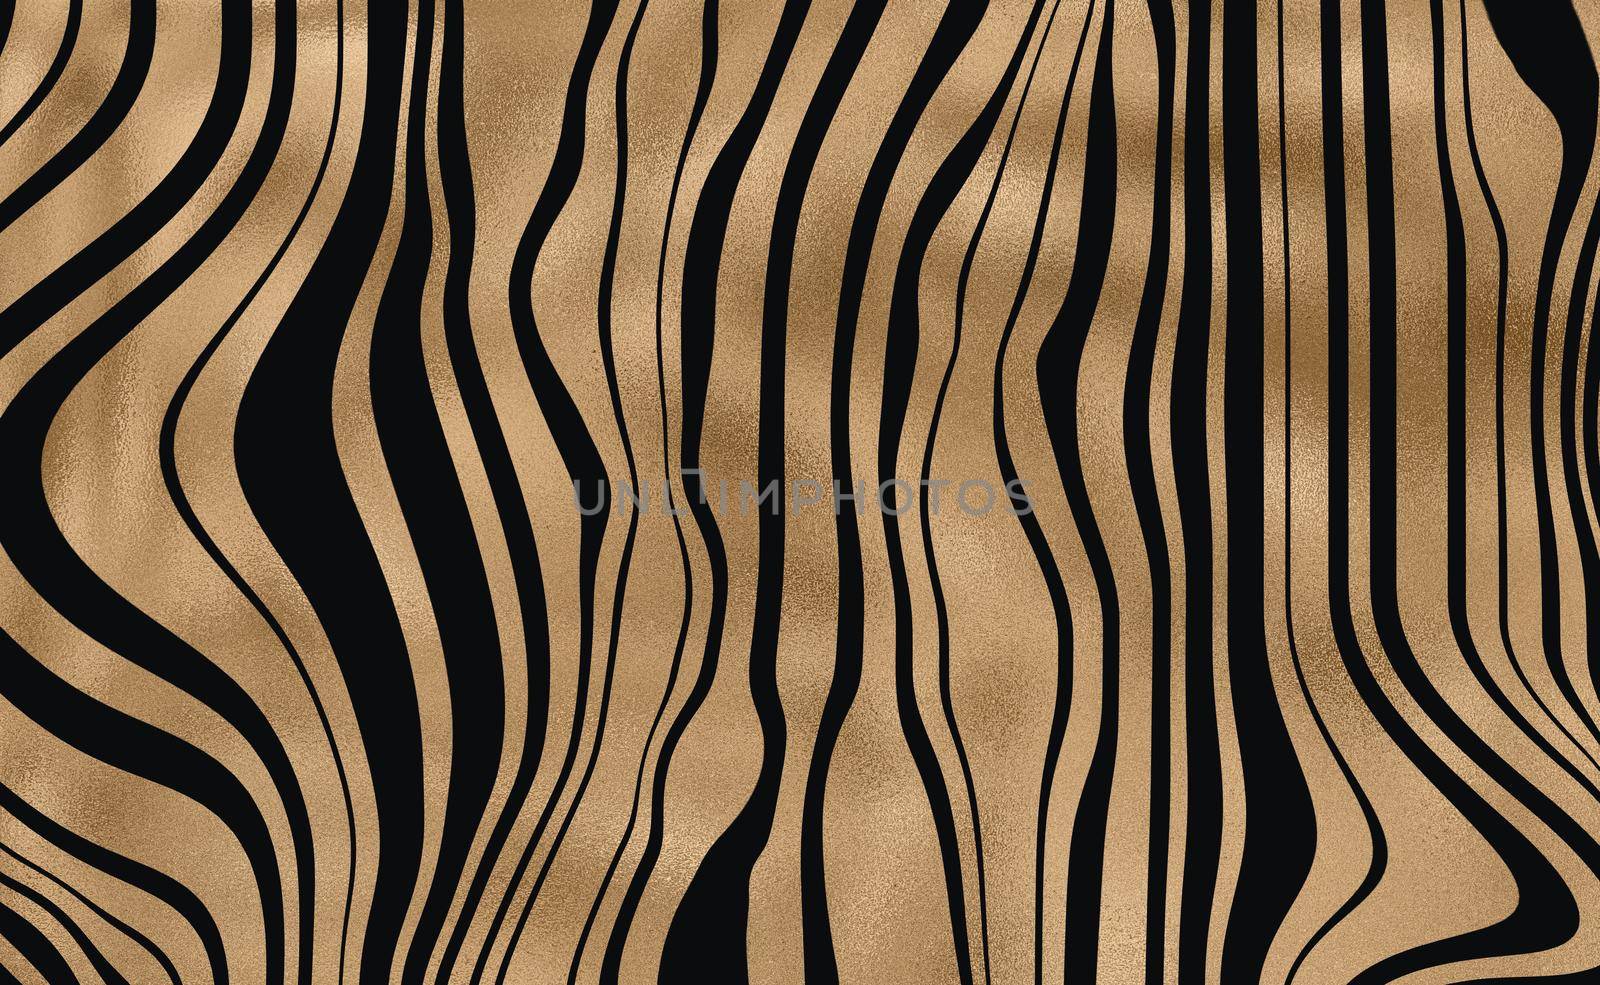 Zebra abstract stripes by NelliPolk